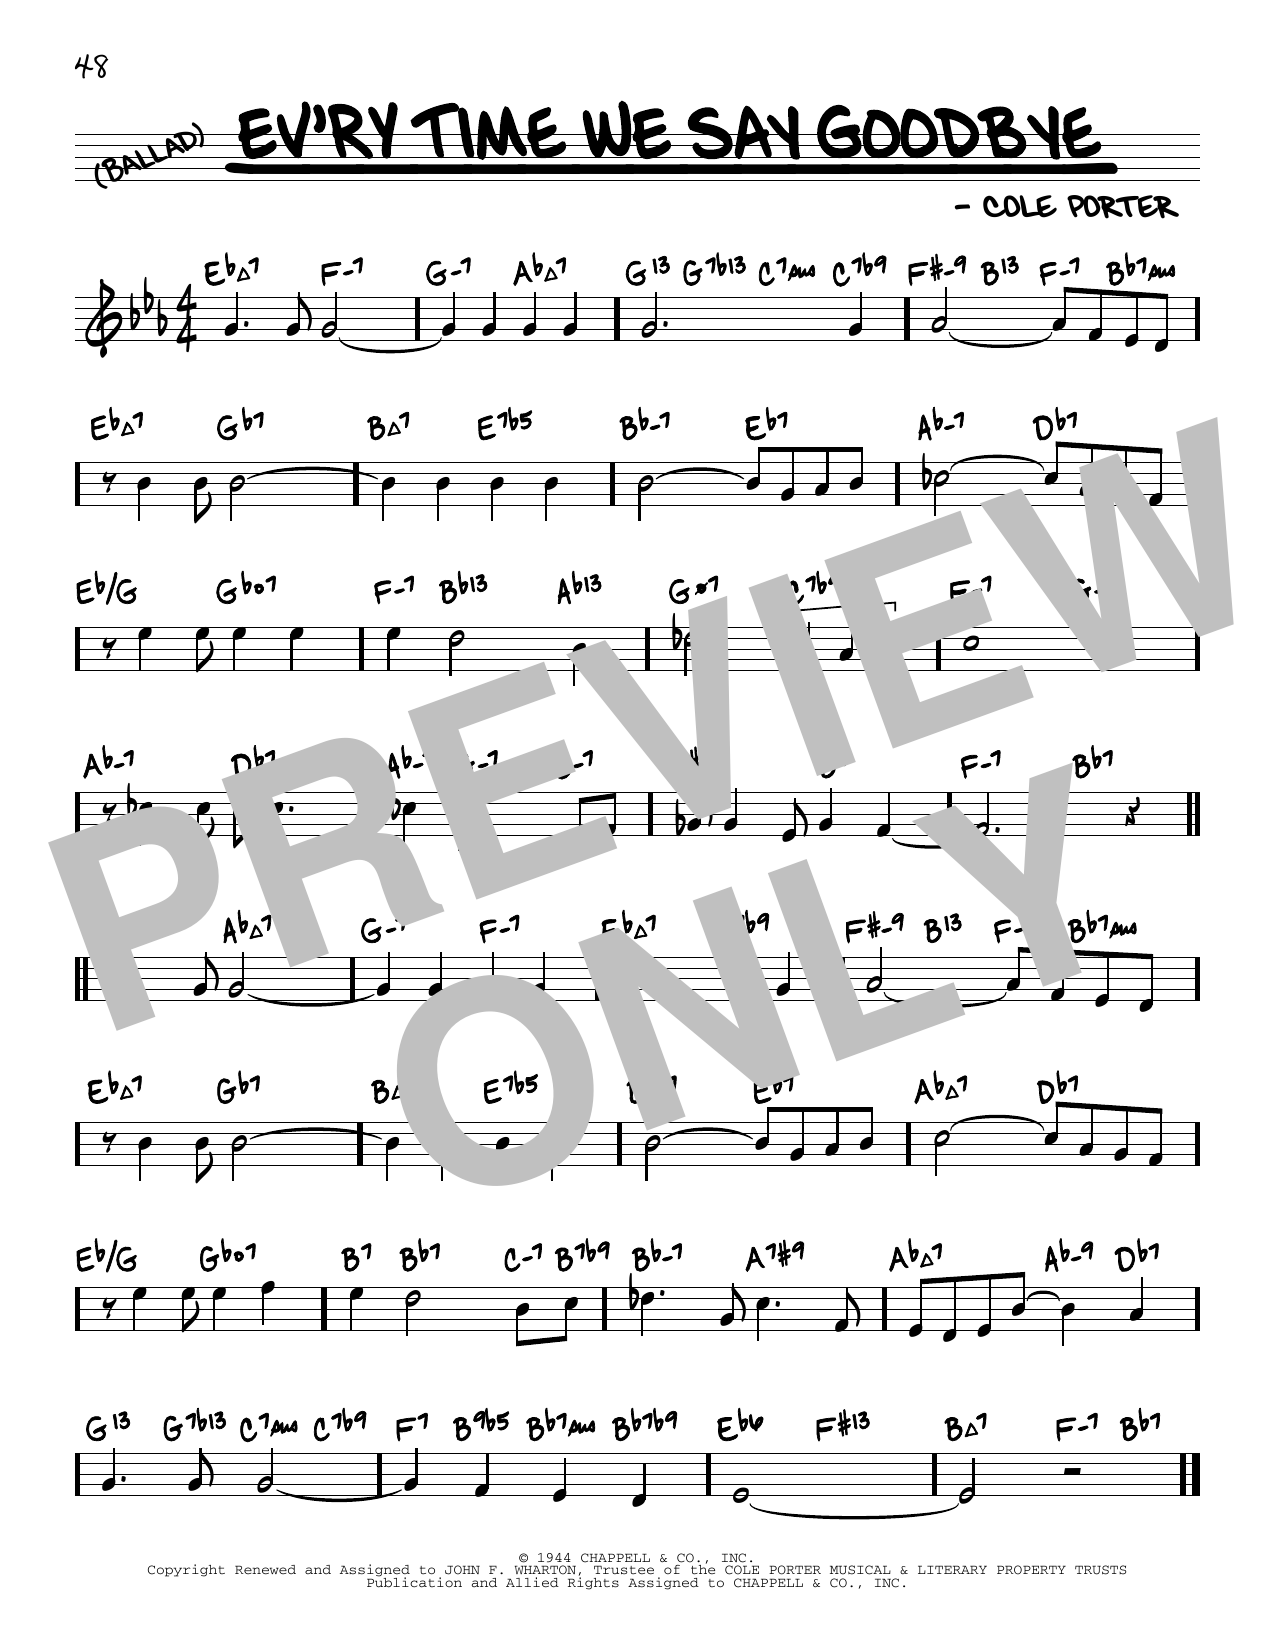 Cole Porter Ev'ry Time We Say Goodbye (arr. David Hazeltine) Sheet Music Notes & Chords for Real Book – Enhanced Chords - Download or Print PDF